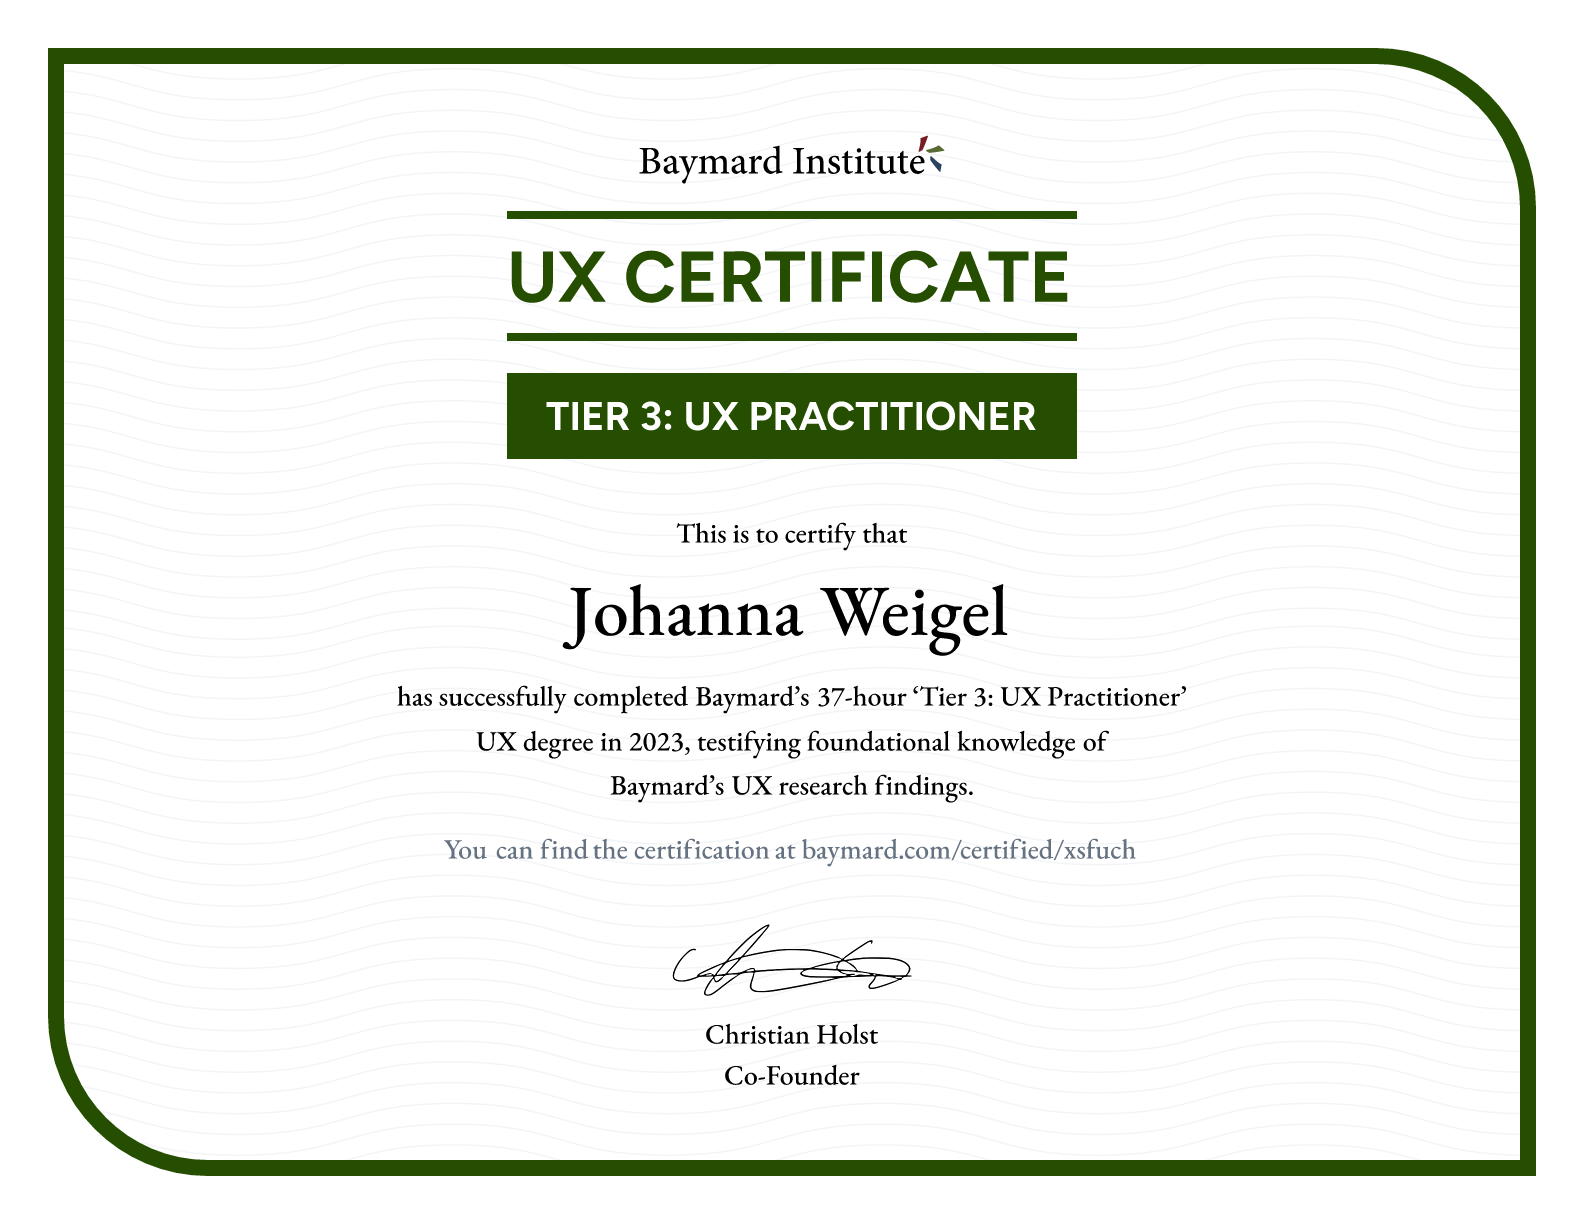 Johanna Weigel’s certificate